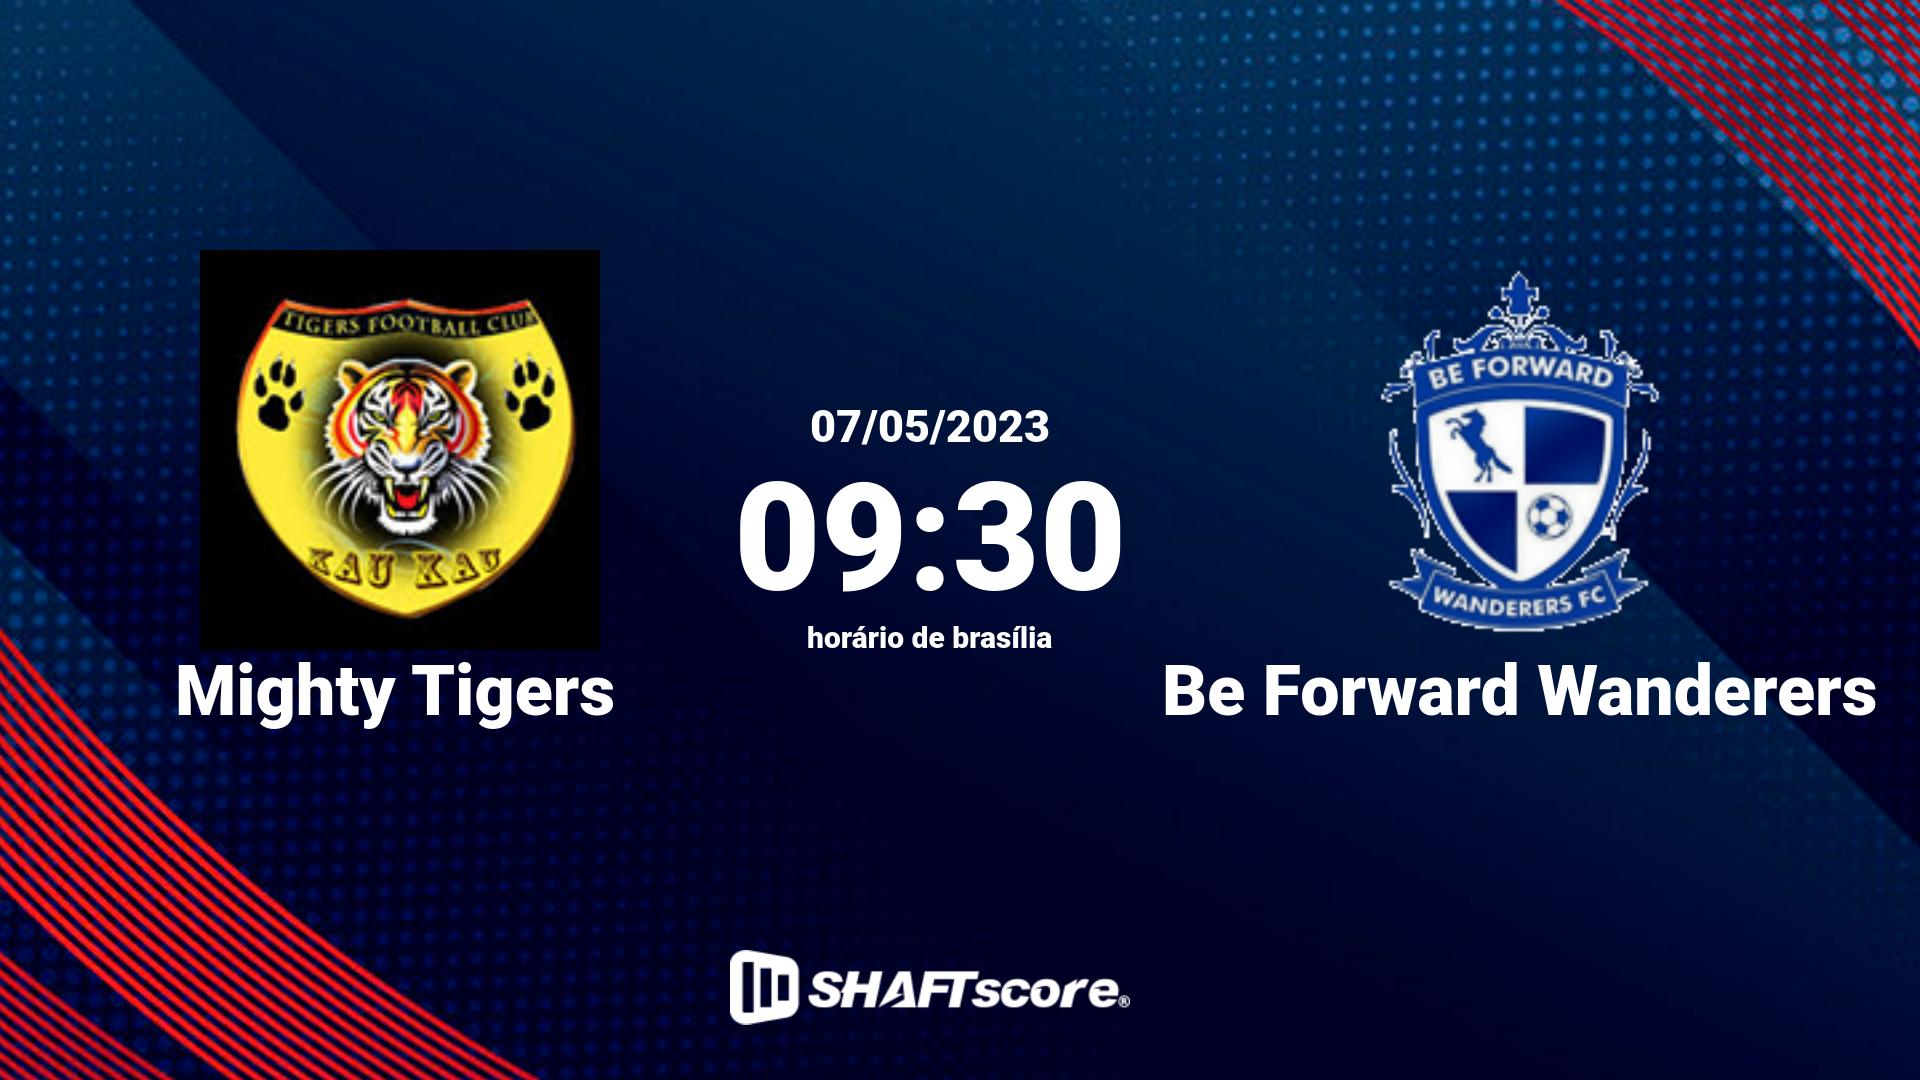 Estatísticas do jogo Mighty Tigers vs Be Forward Wanderers 07.05 09:30